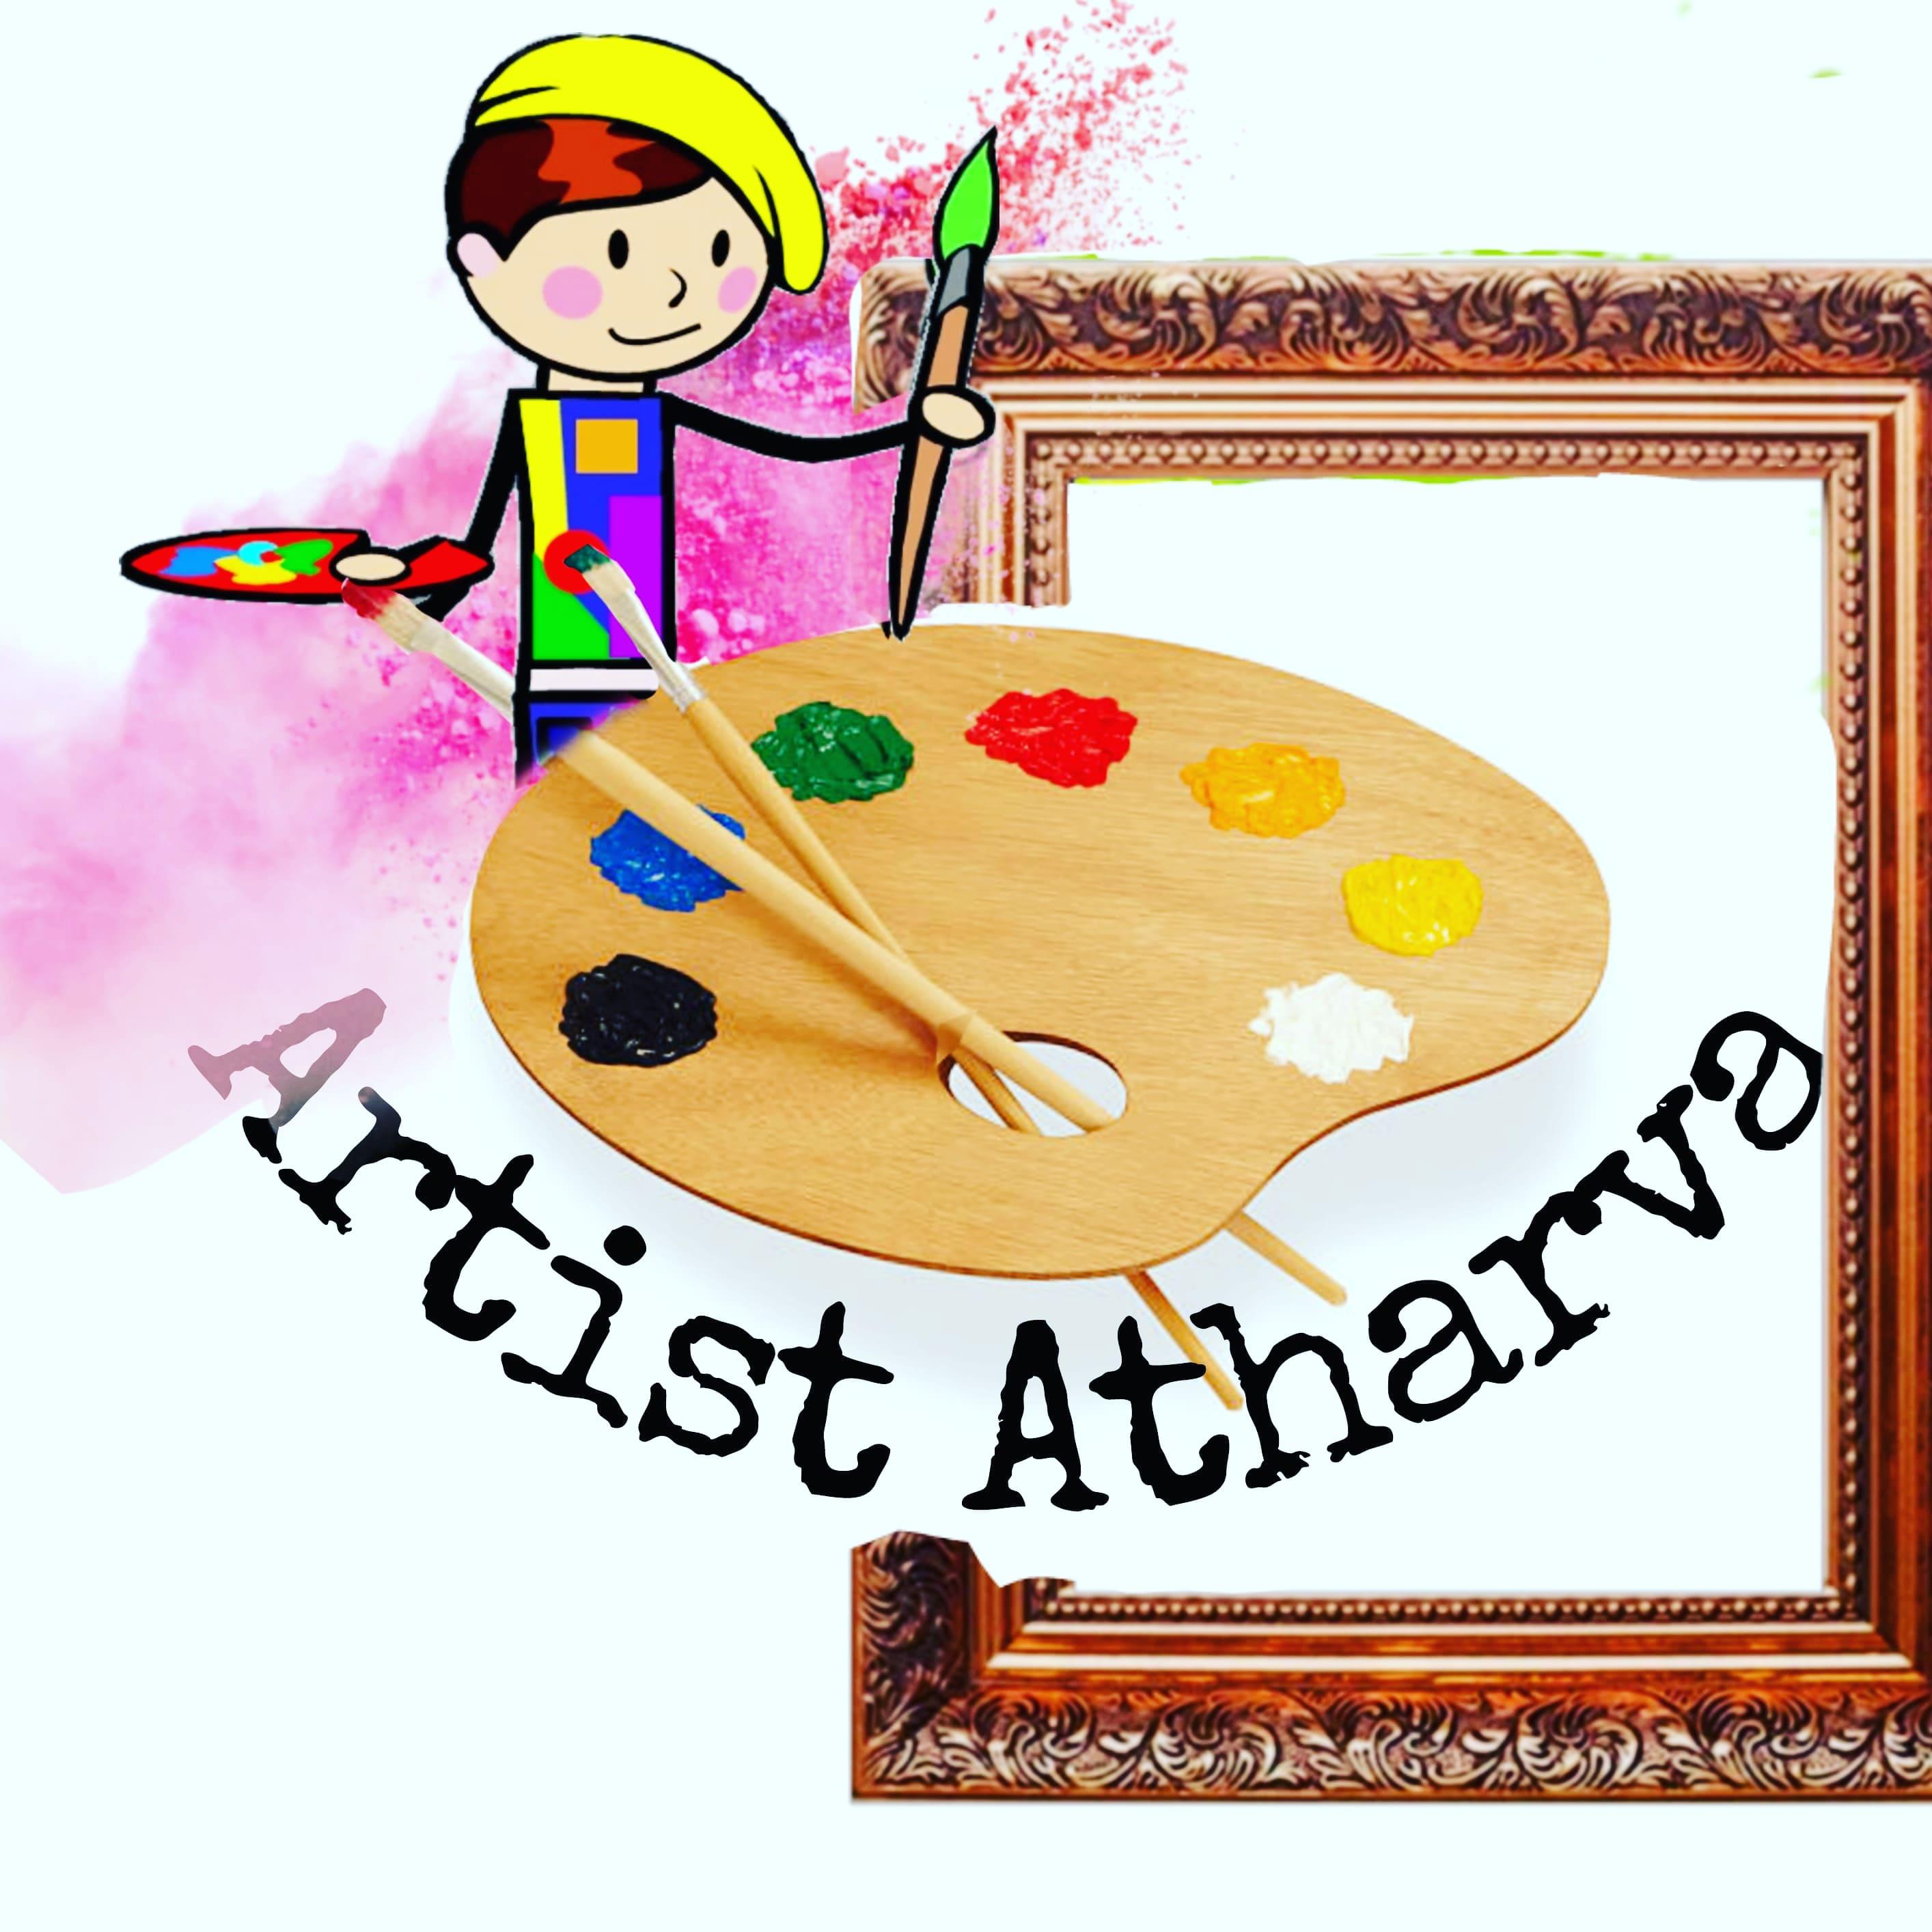 Artist Atharva